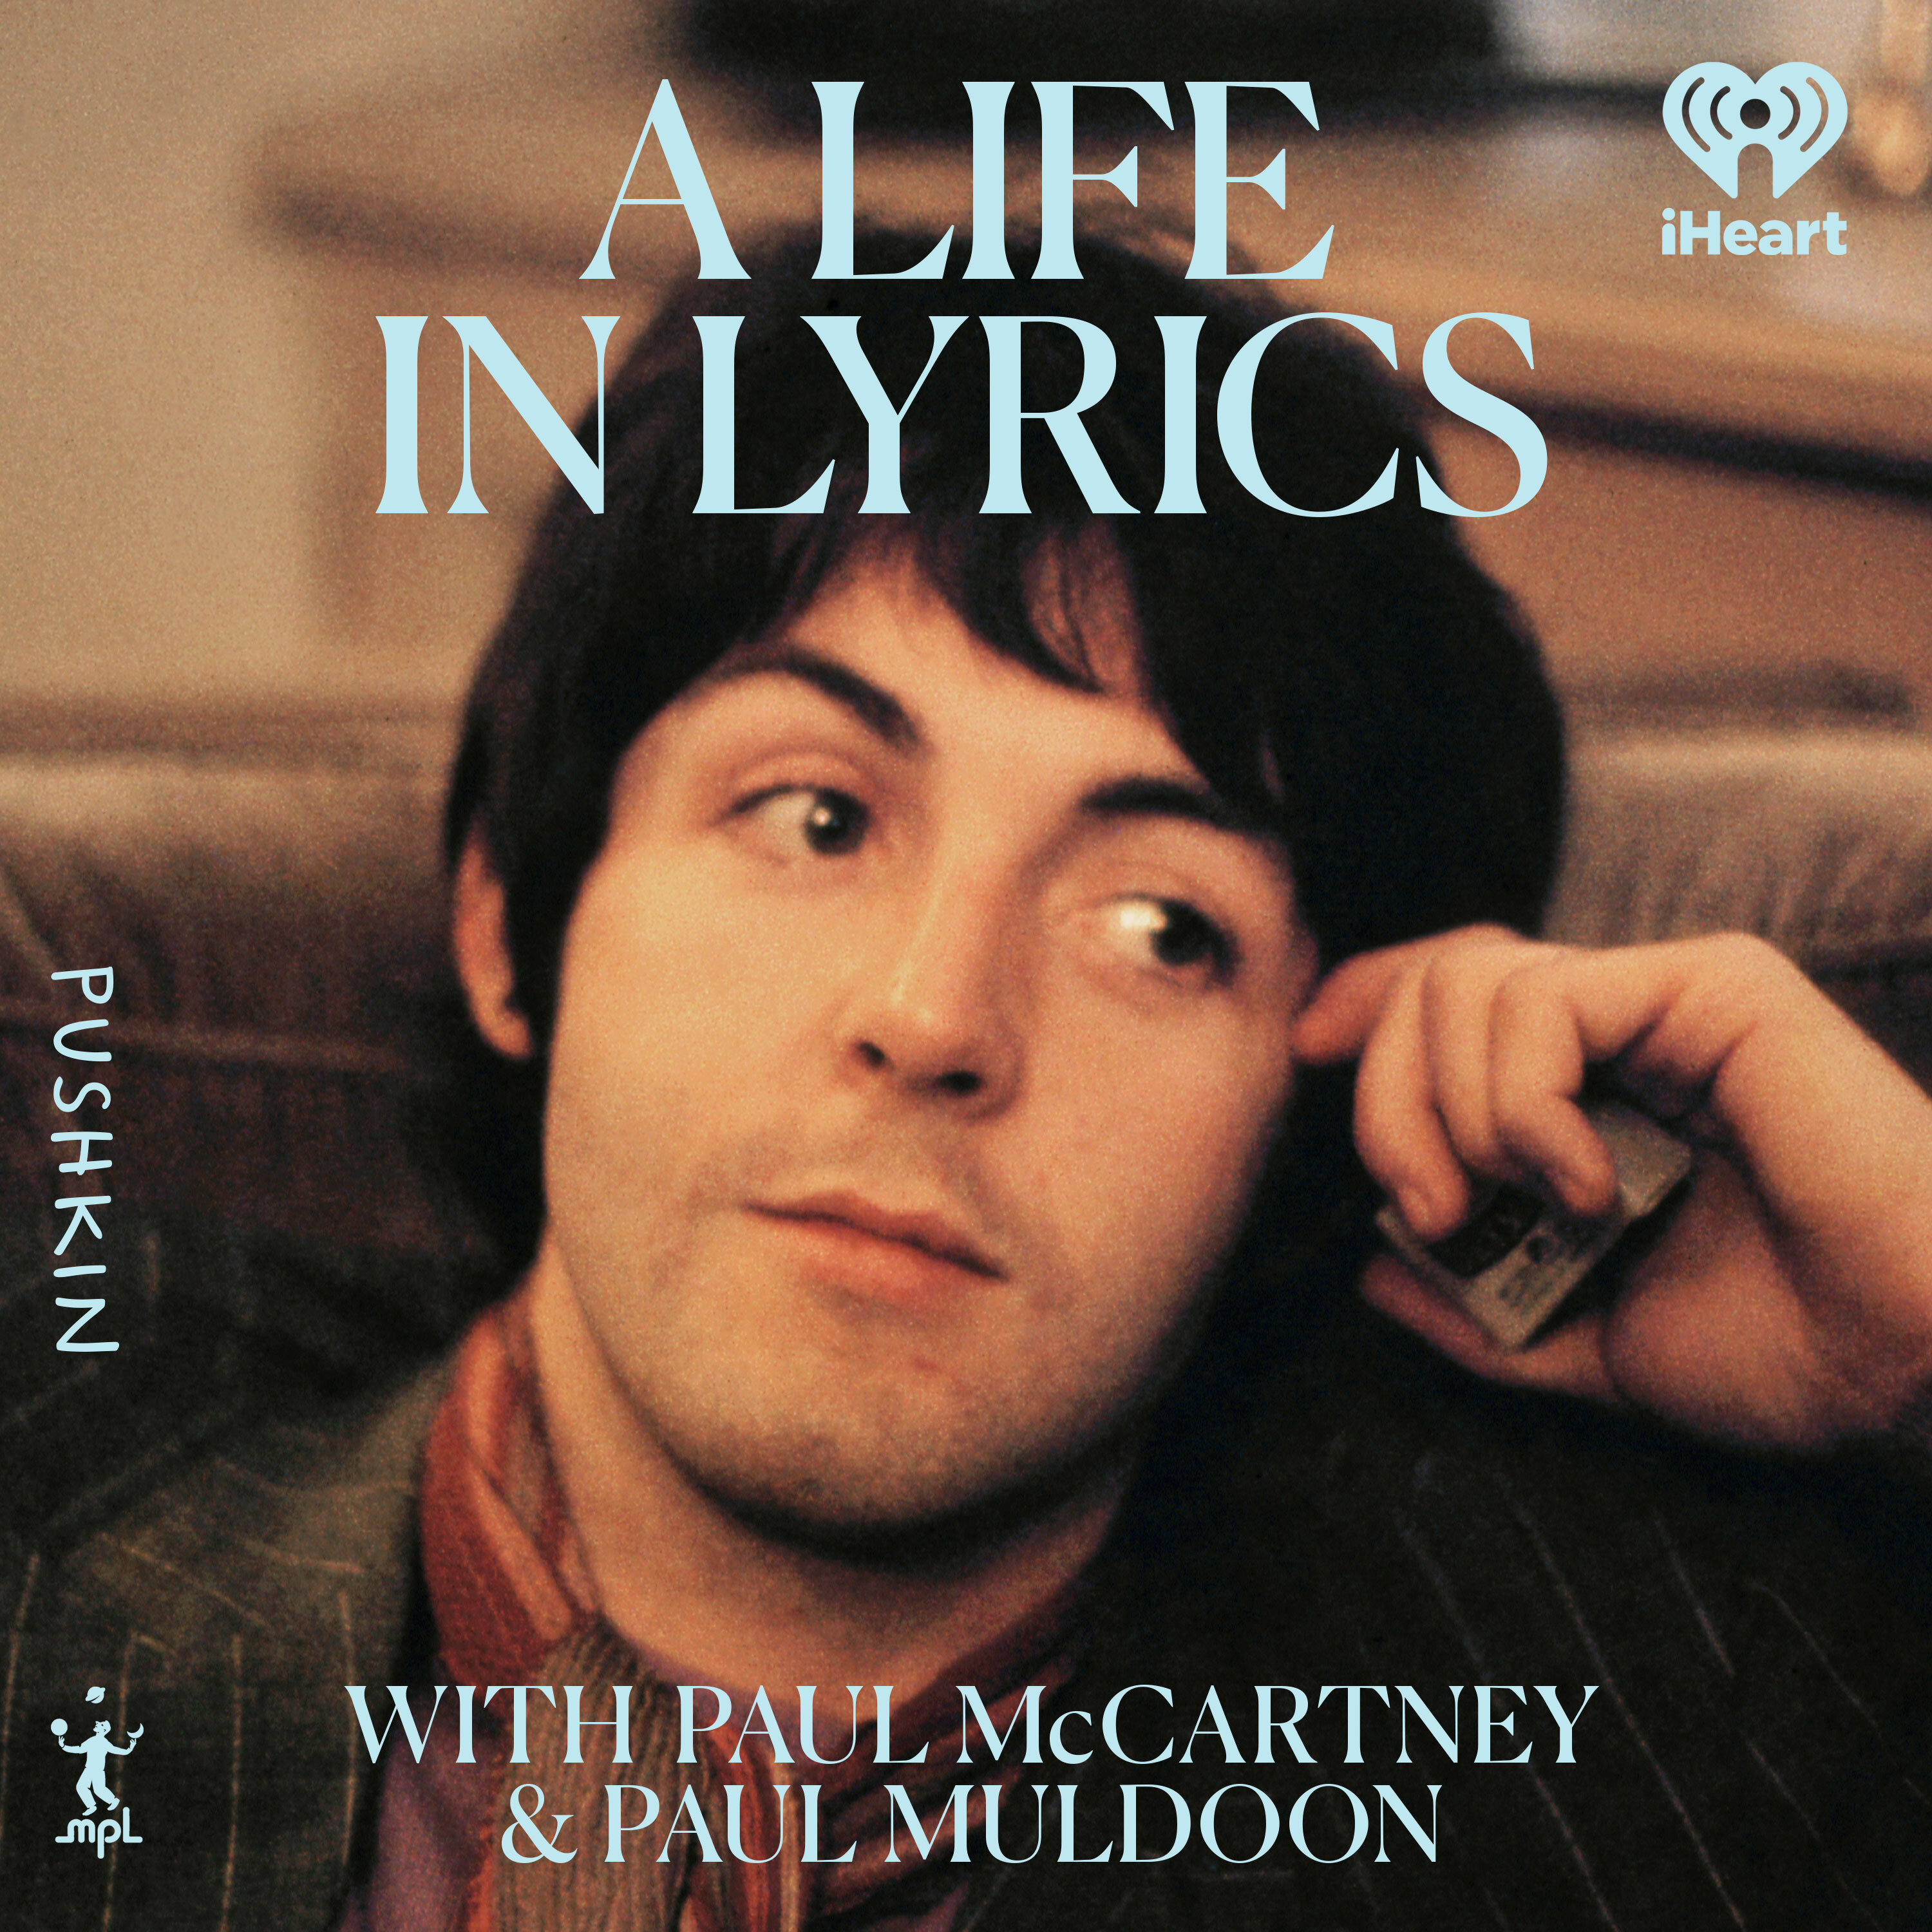 McCartney: A Life in Lyrics podcast show image